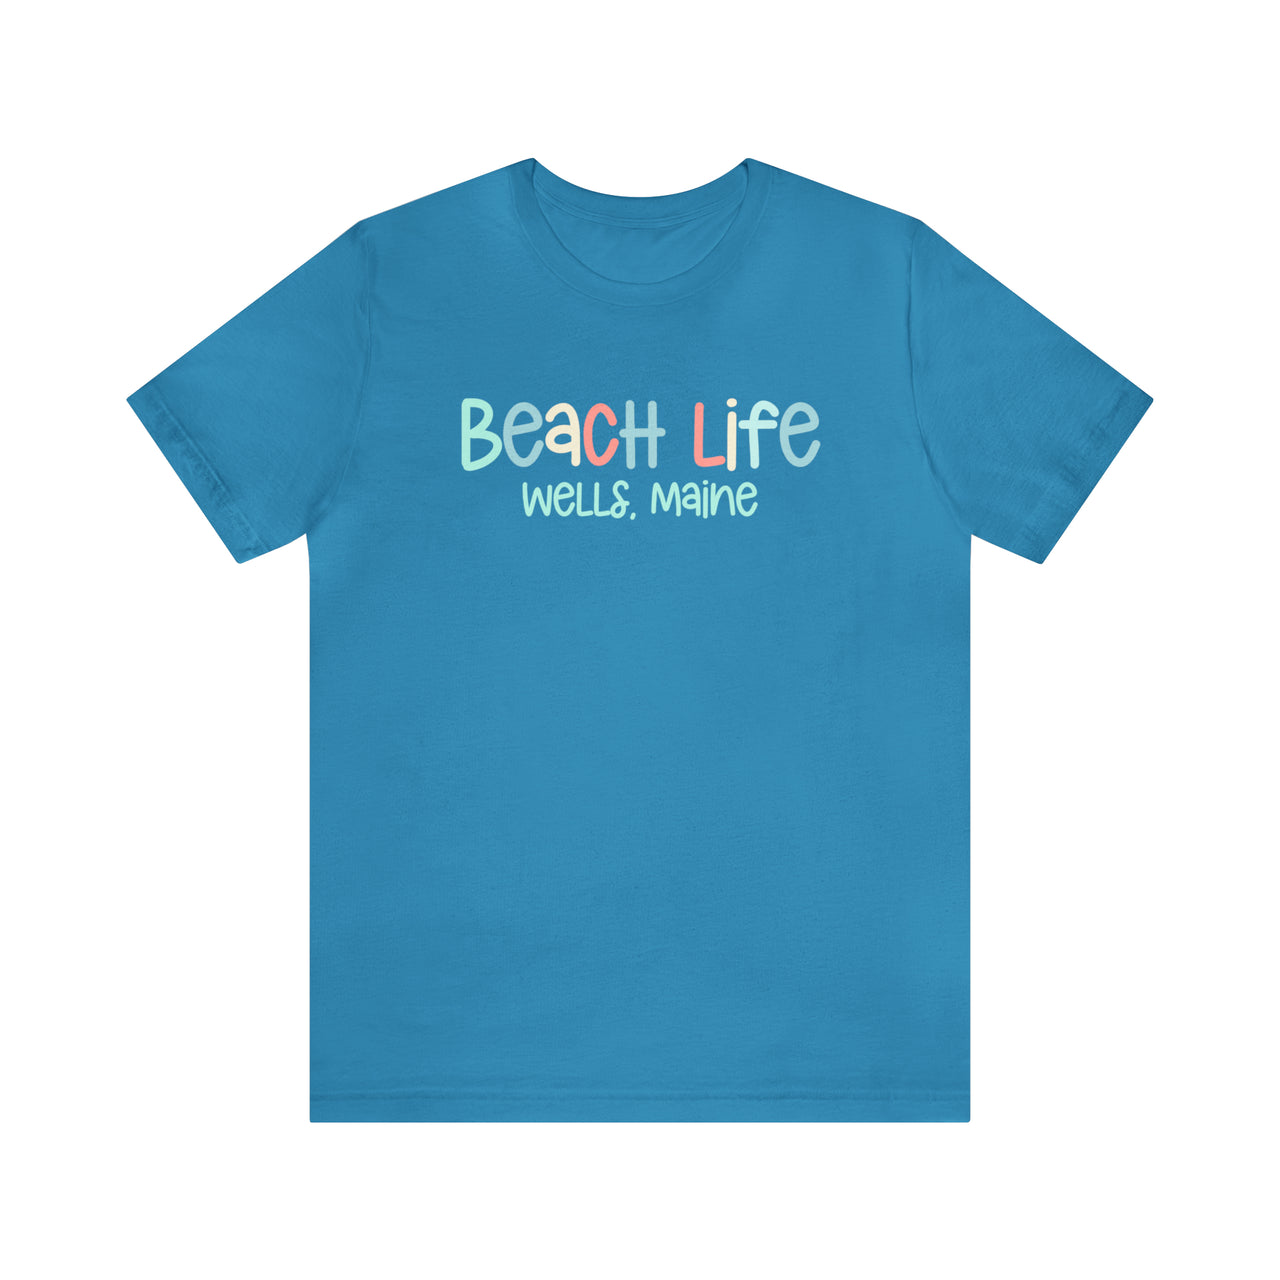 Beach Life Weekend Tee Shirt, Personalized Aqua